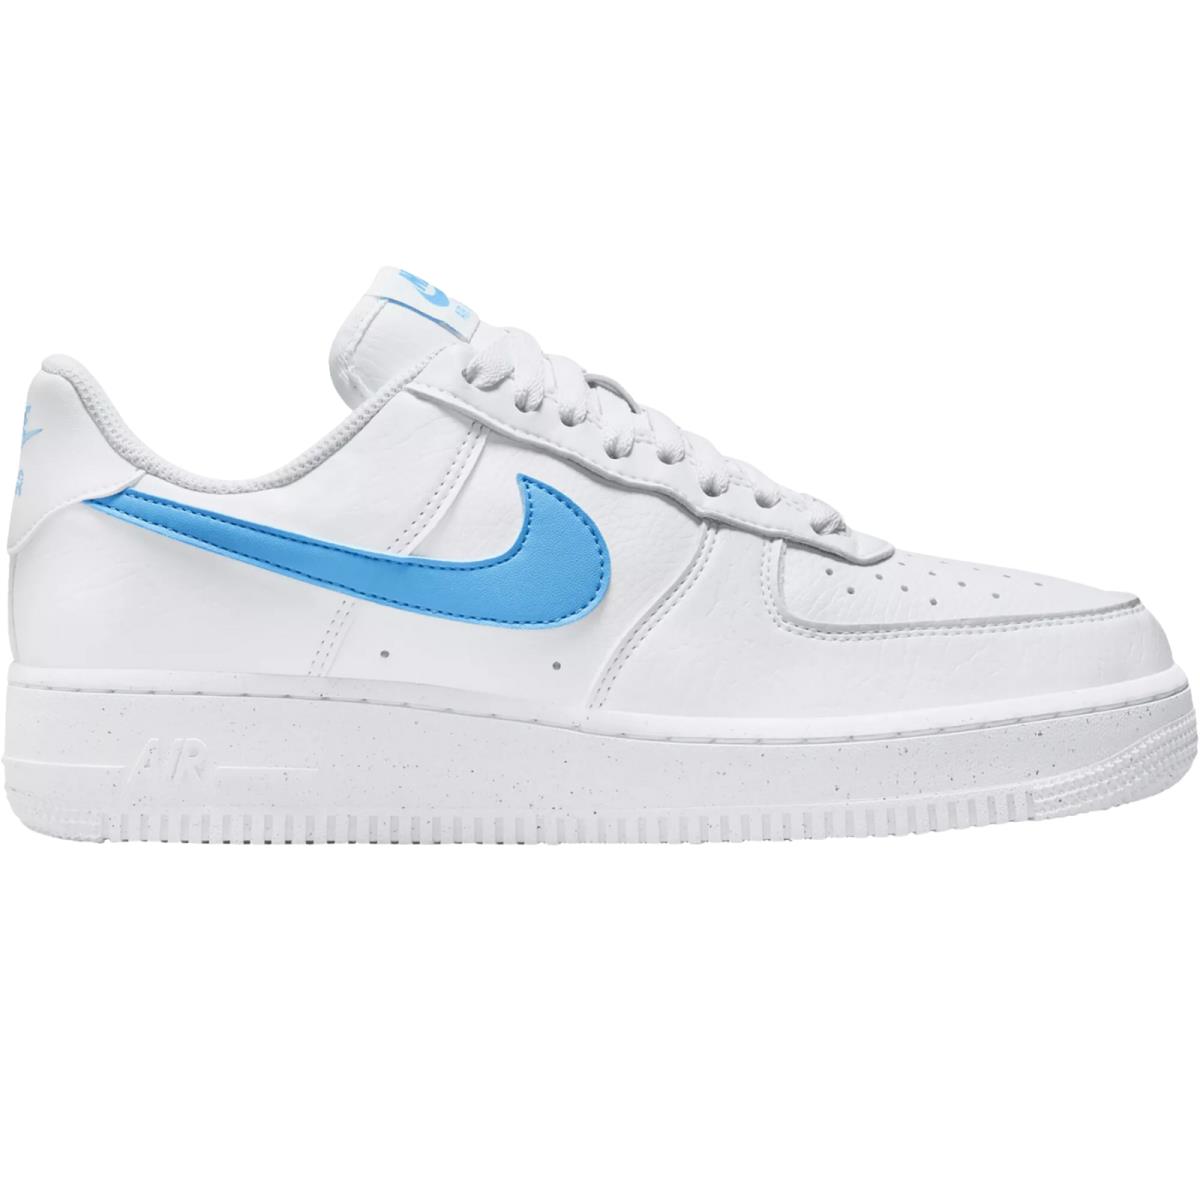 Nike Air Force 1 Women`s Casual Shoes All Colors US Sizes 6-11 White/University Blue/Volt